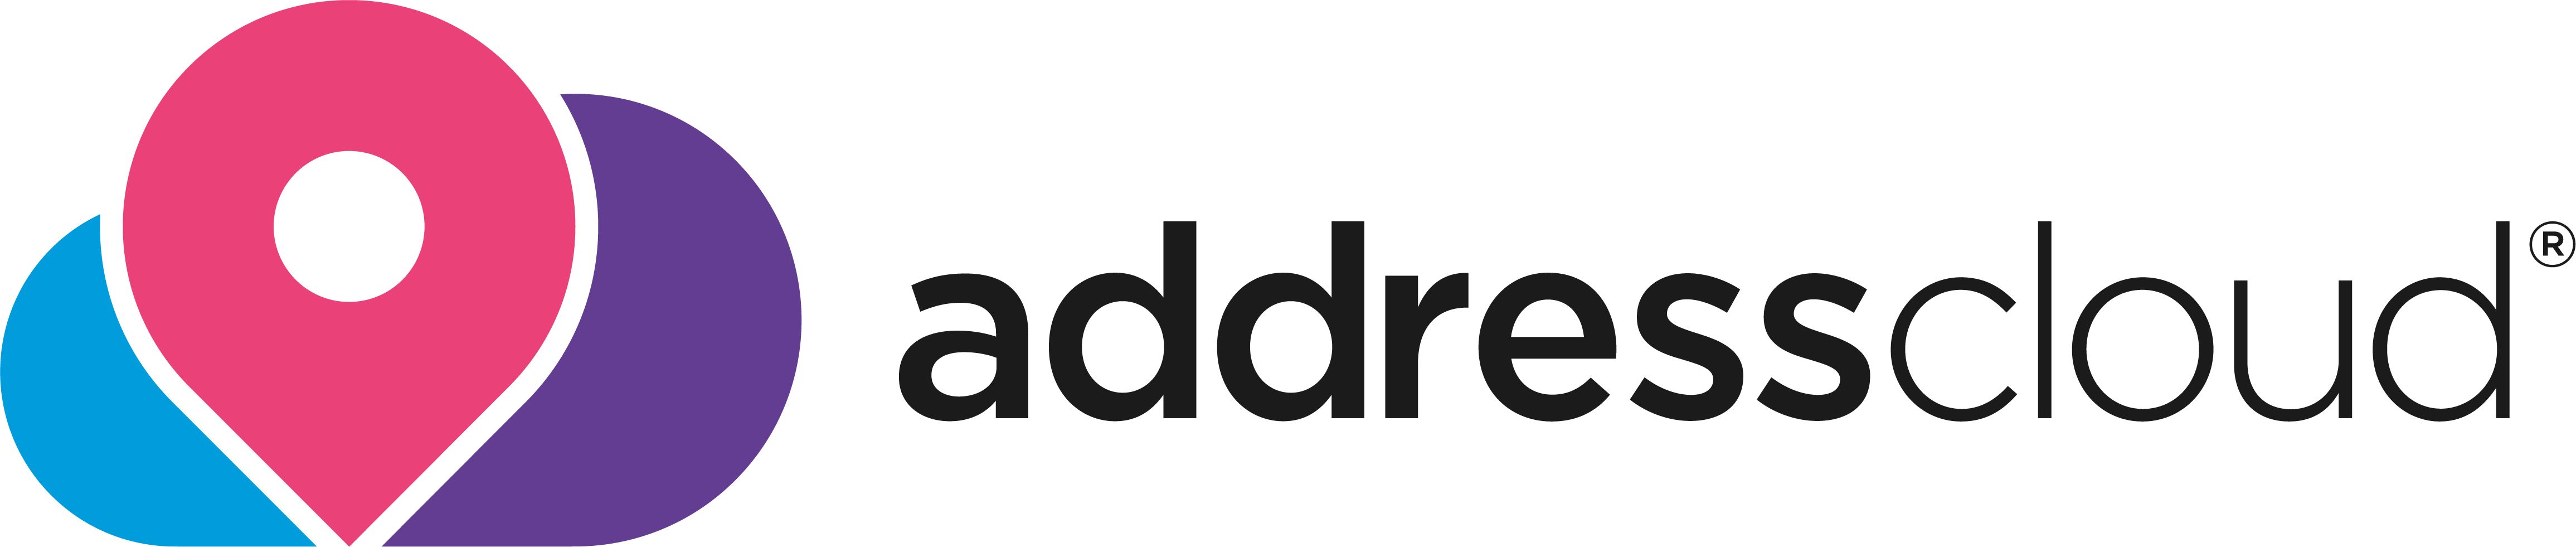 addresscloud Logo